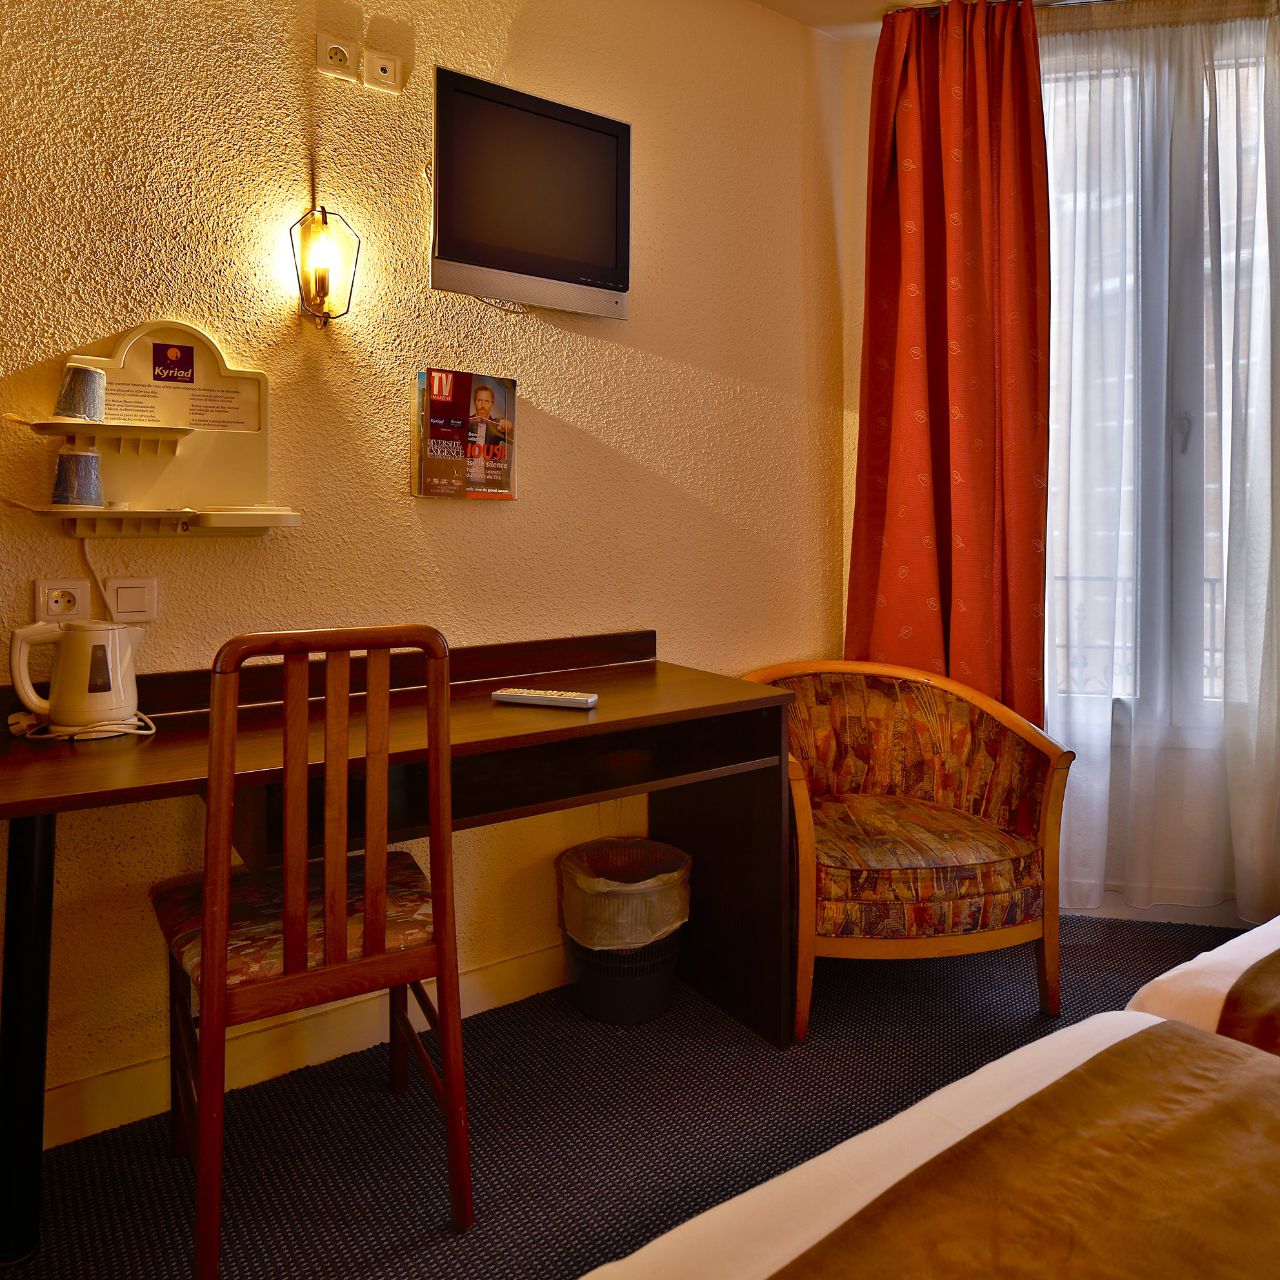 Hotel Arc Paris Porte d'Orleans - Montrouge - Great prices at HOTEL INFO